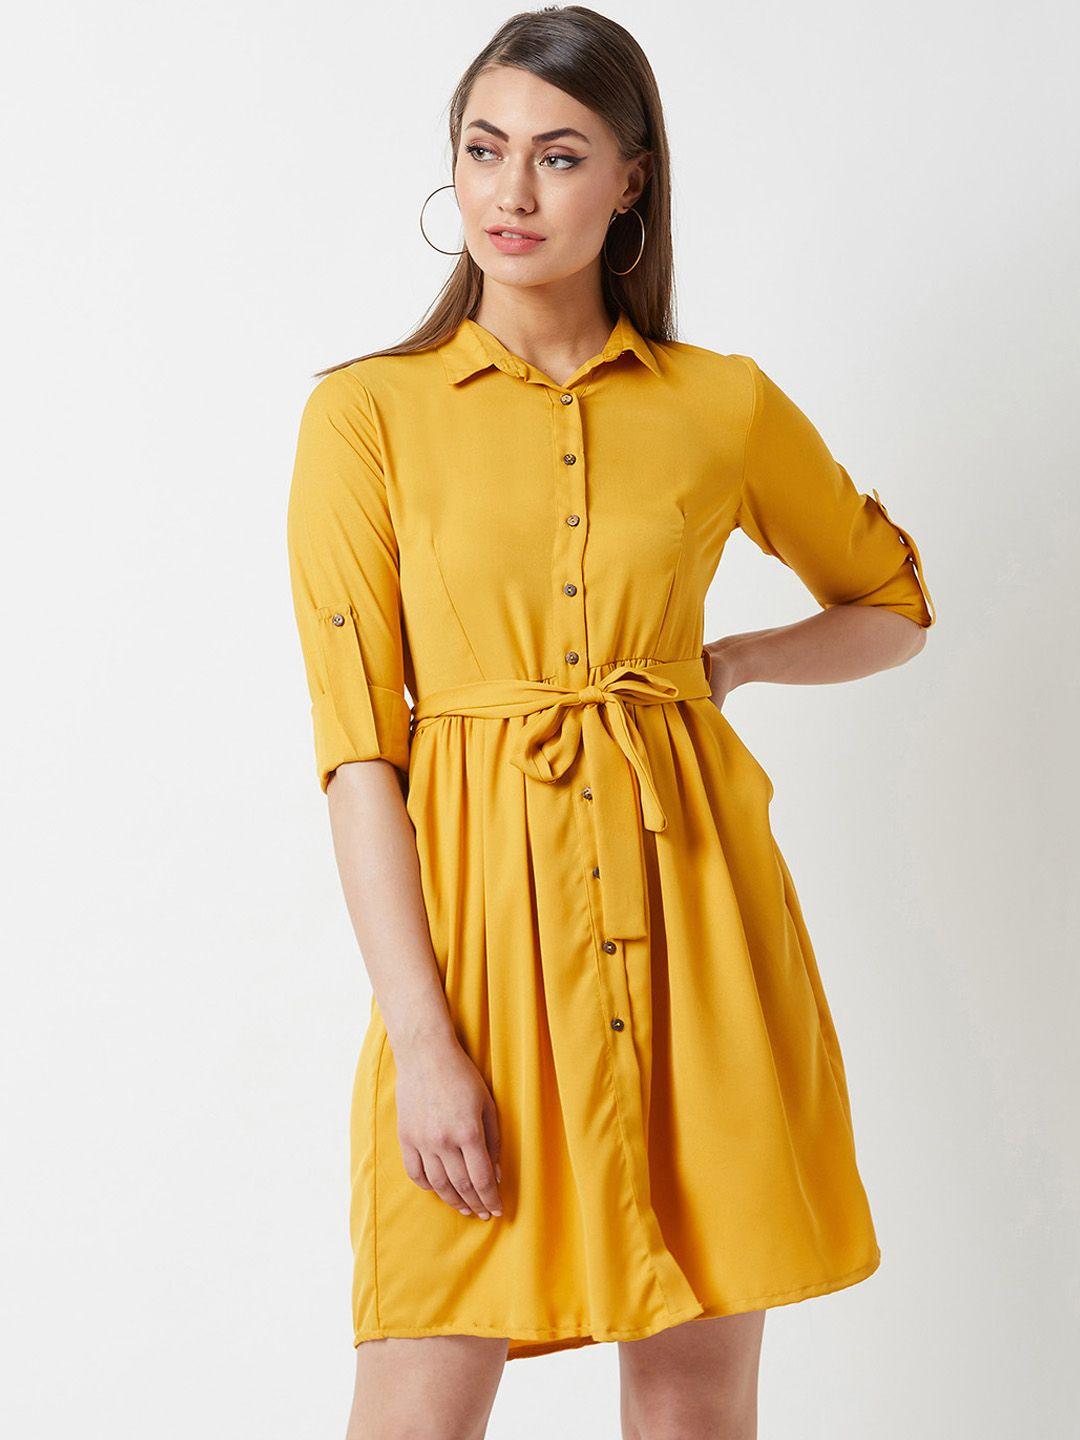 miss-chase-women-solid-mustard-yellow-shirt-dress